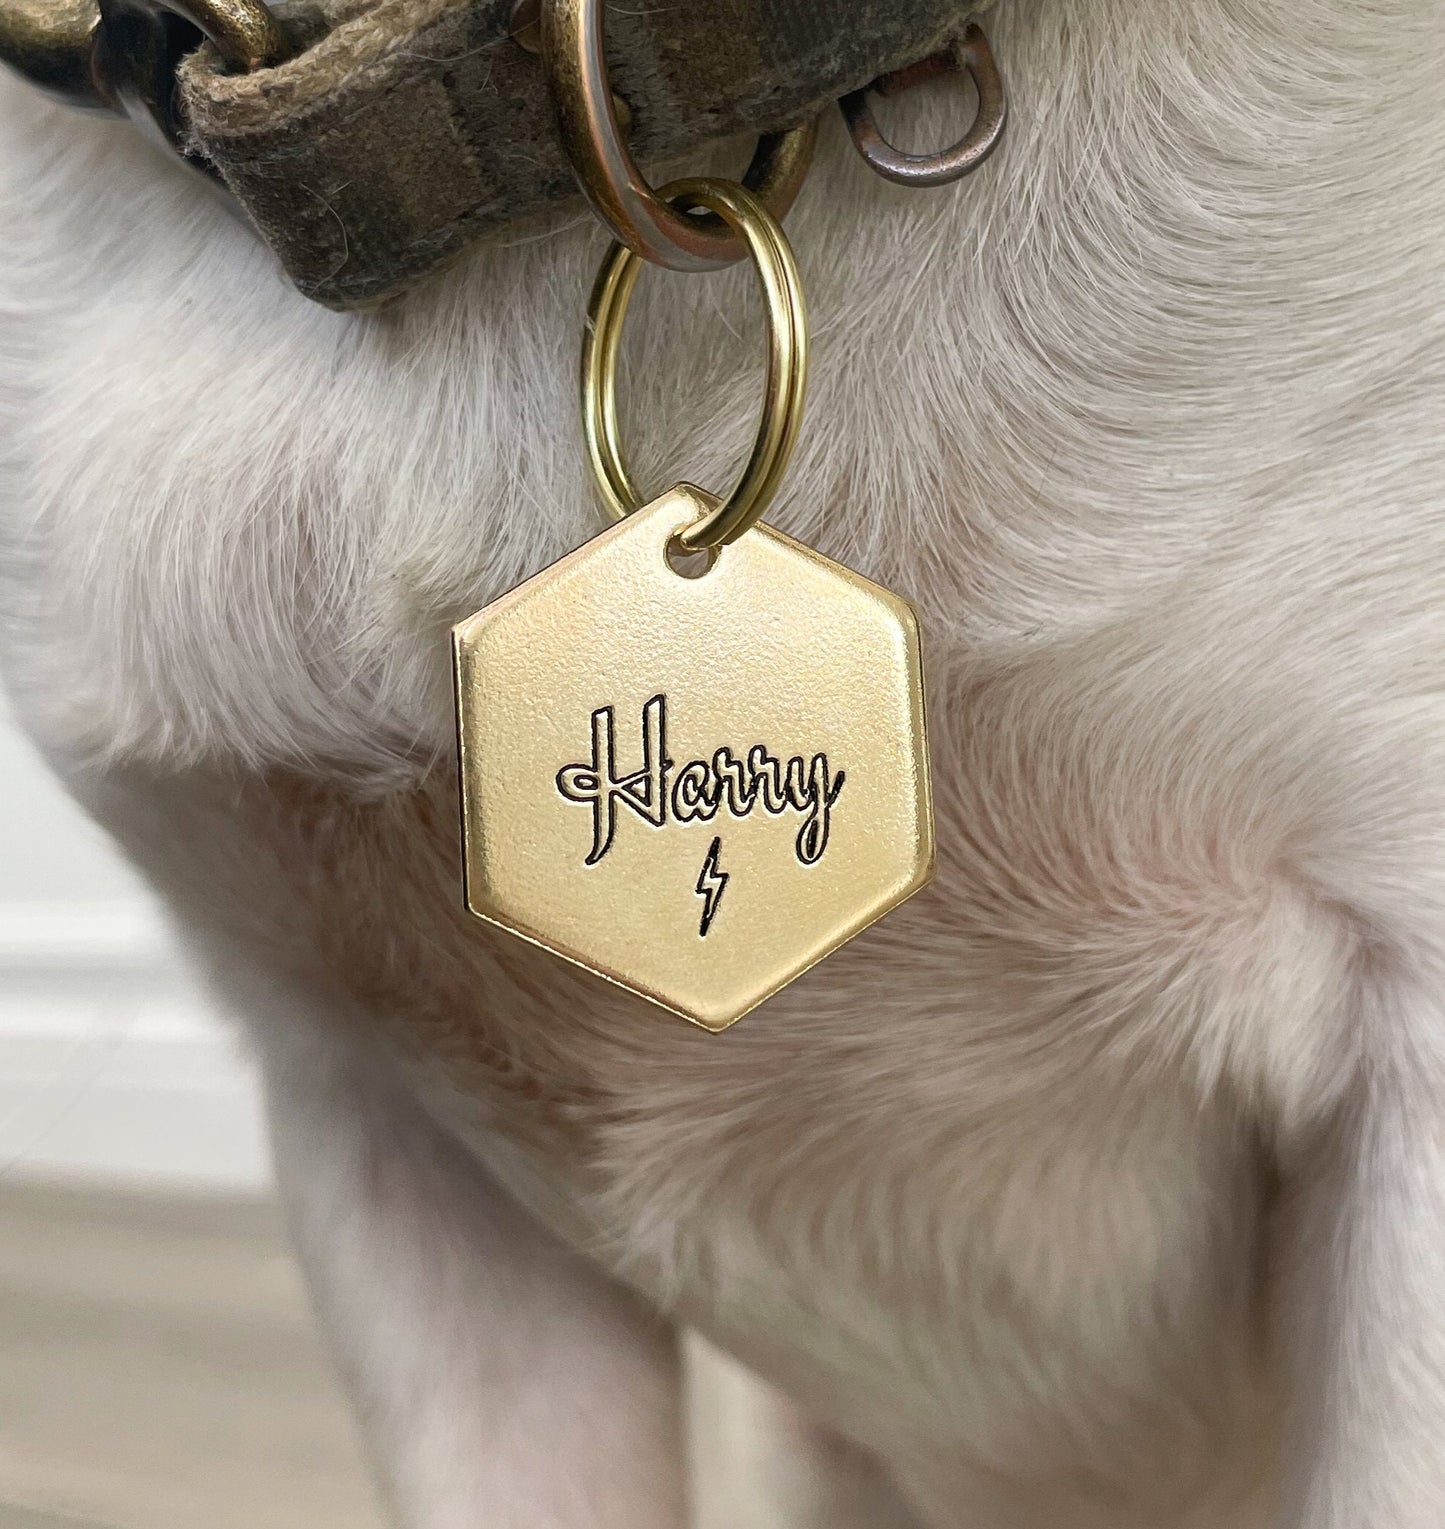 Lightning Bolt Design Engraved Dog Tag - Cat ID Tag - Dog Collar Tag - Custom Tag - Personalized Tag - Pet ID Tag - Pet Name Tag - Harry Tag